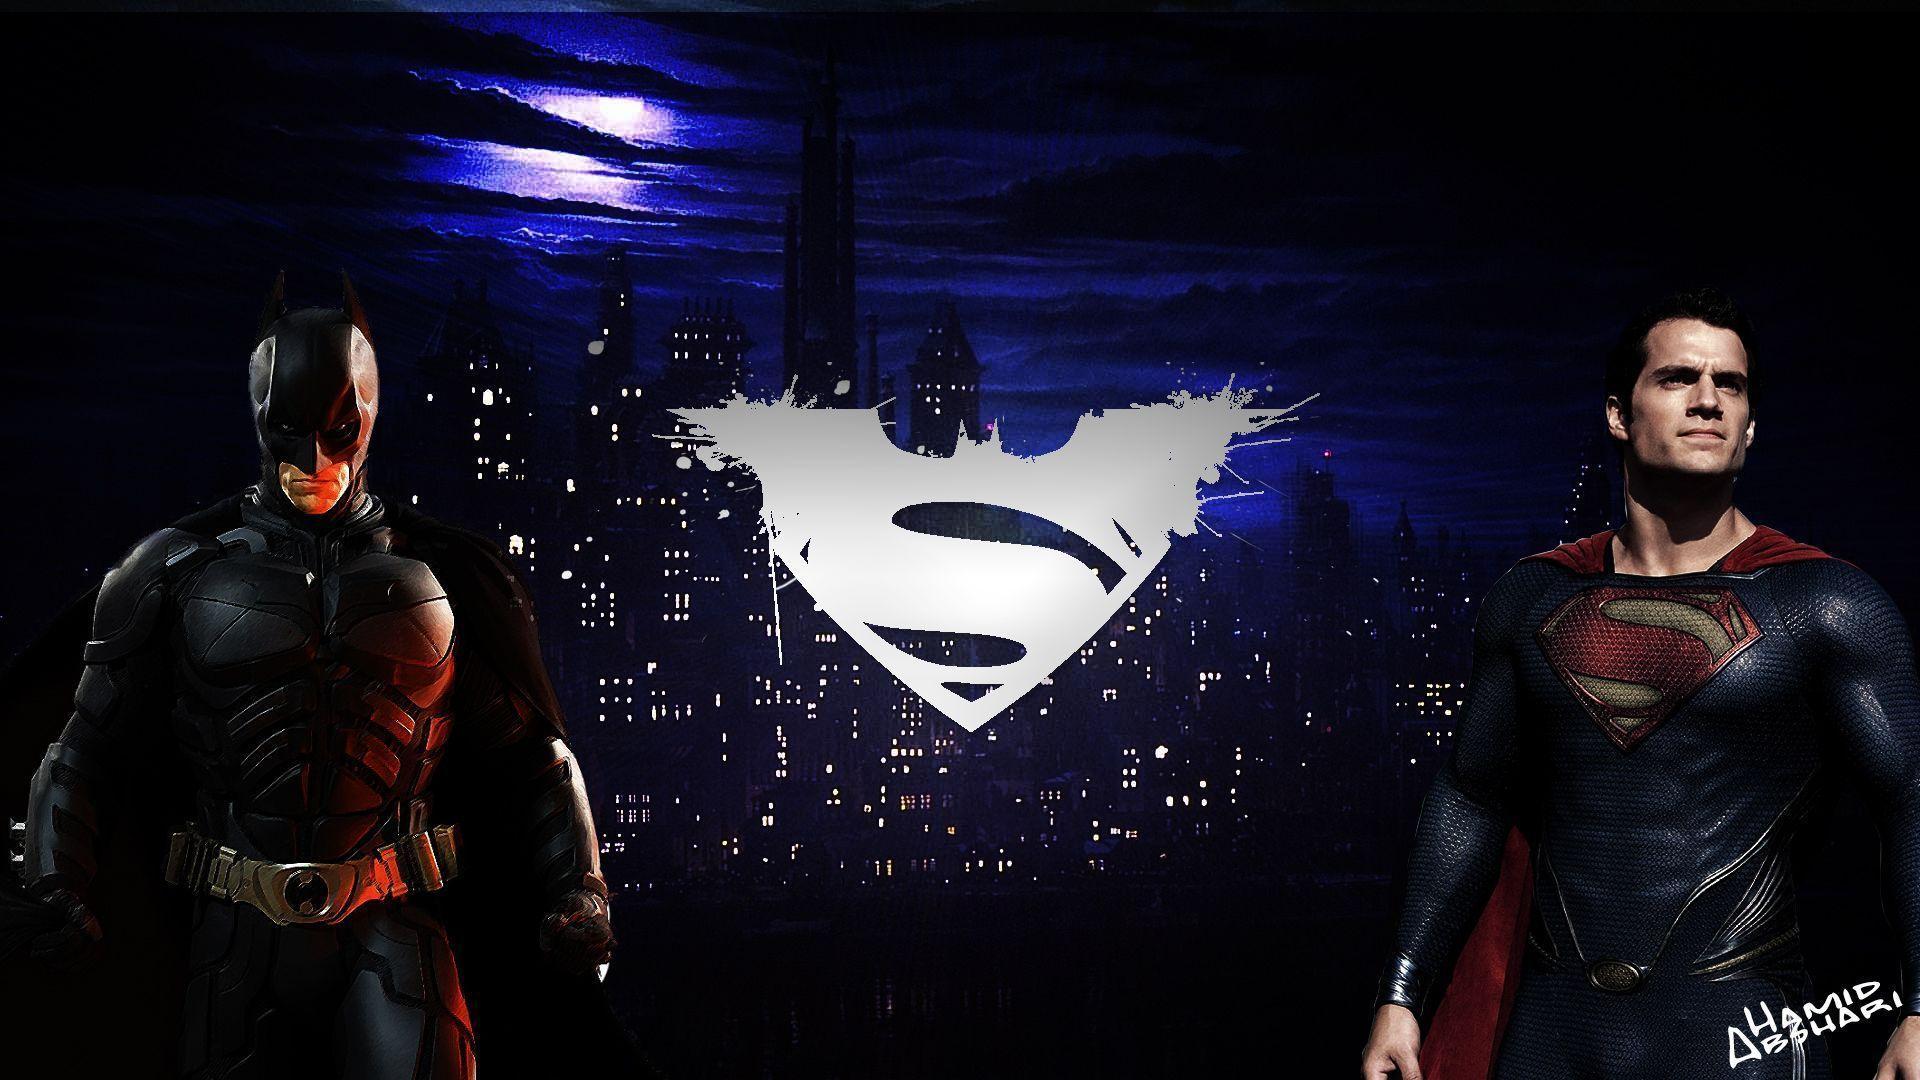 2015 Movie Batman Vs Superman Image Wallpapers Gallery